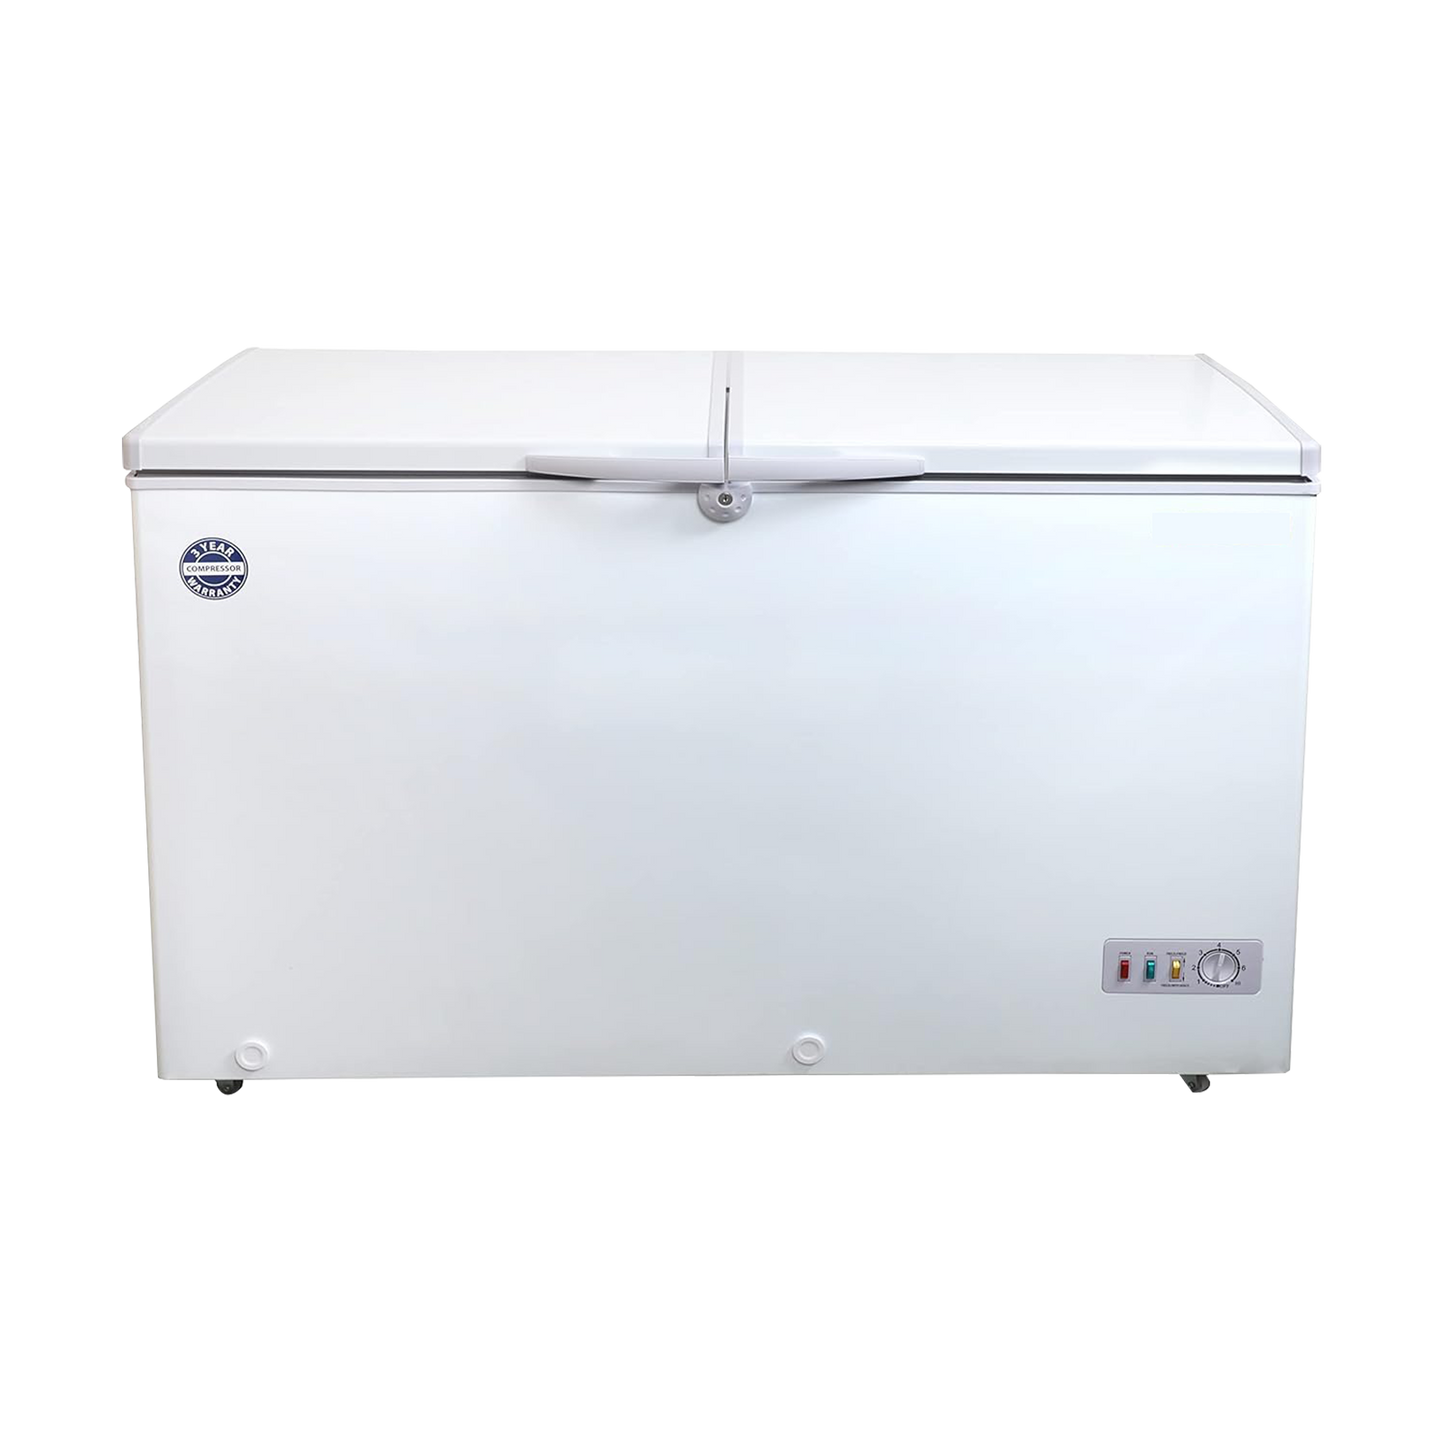 Emtex 335 Litres Double Door Chest Freezer (Direct Cooling Technology, CHFK350DGS, White)